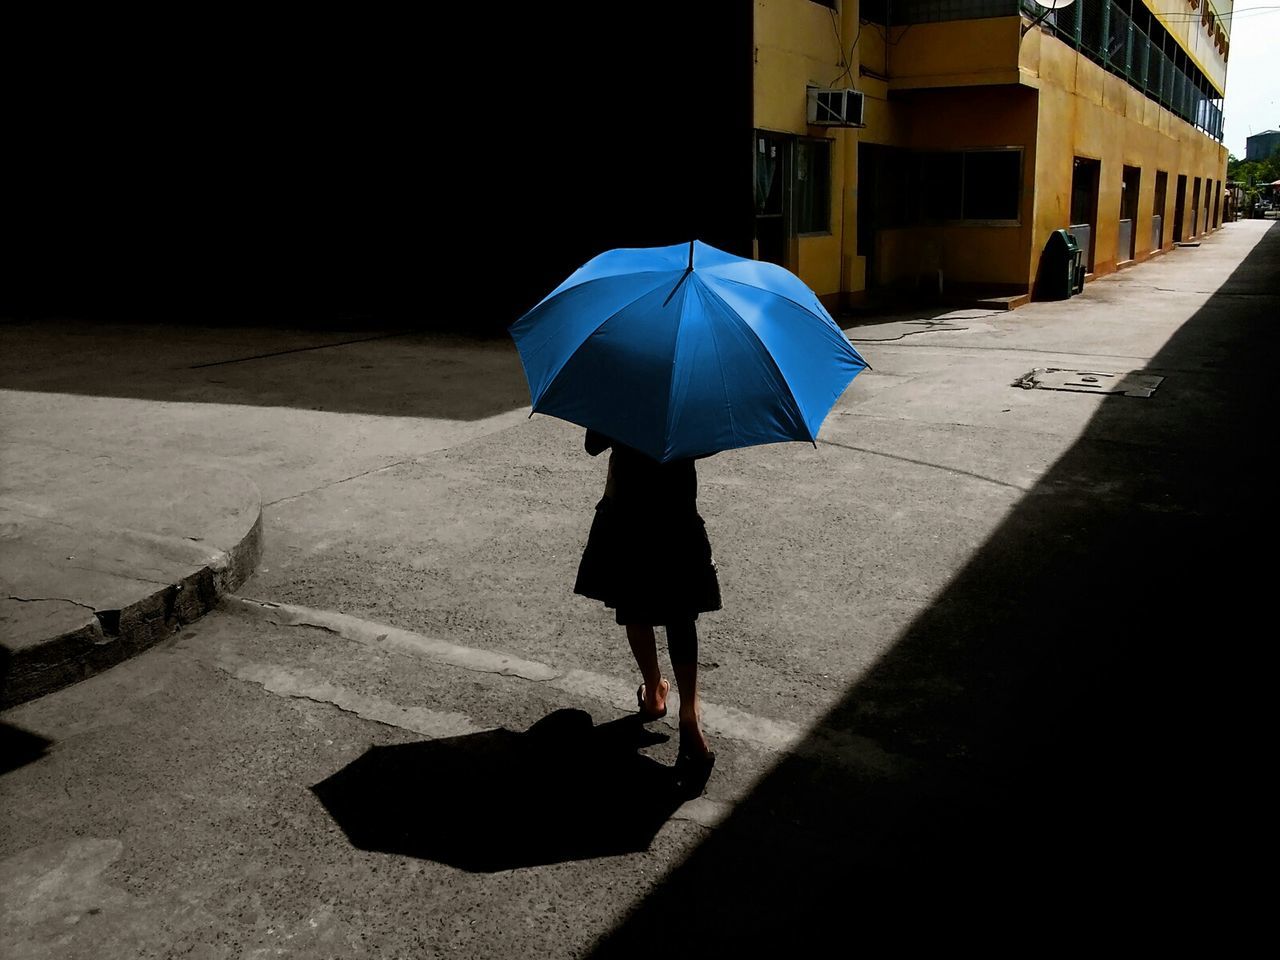 Woman walking with umbrella